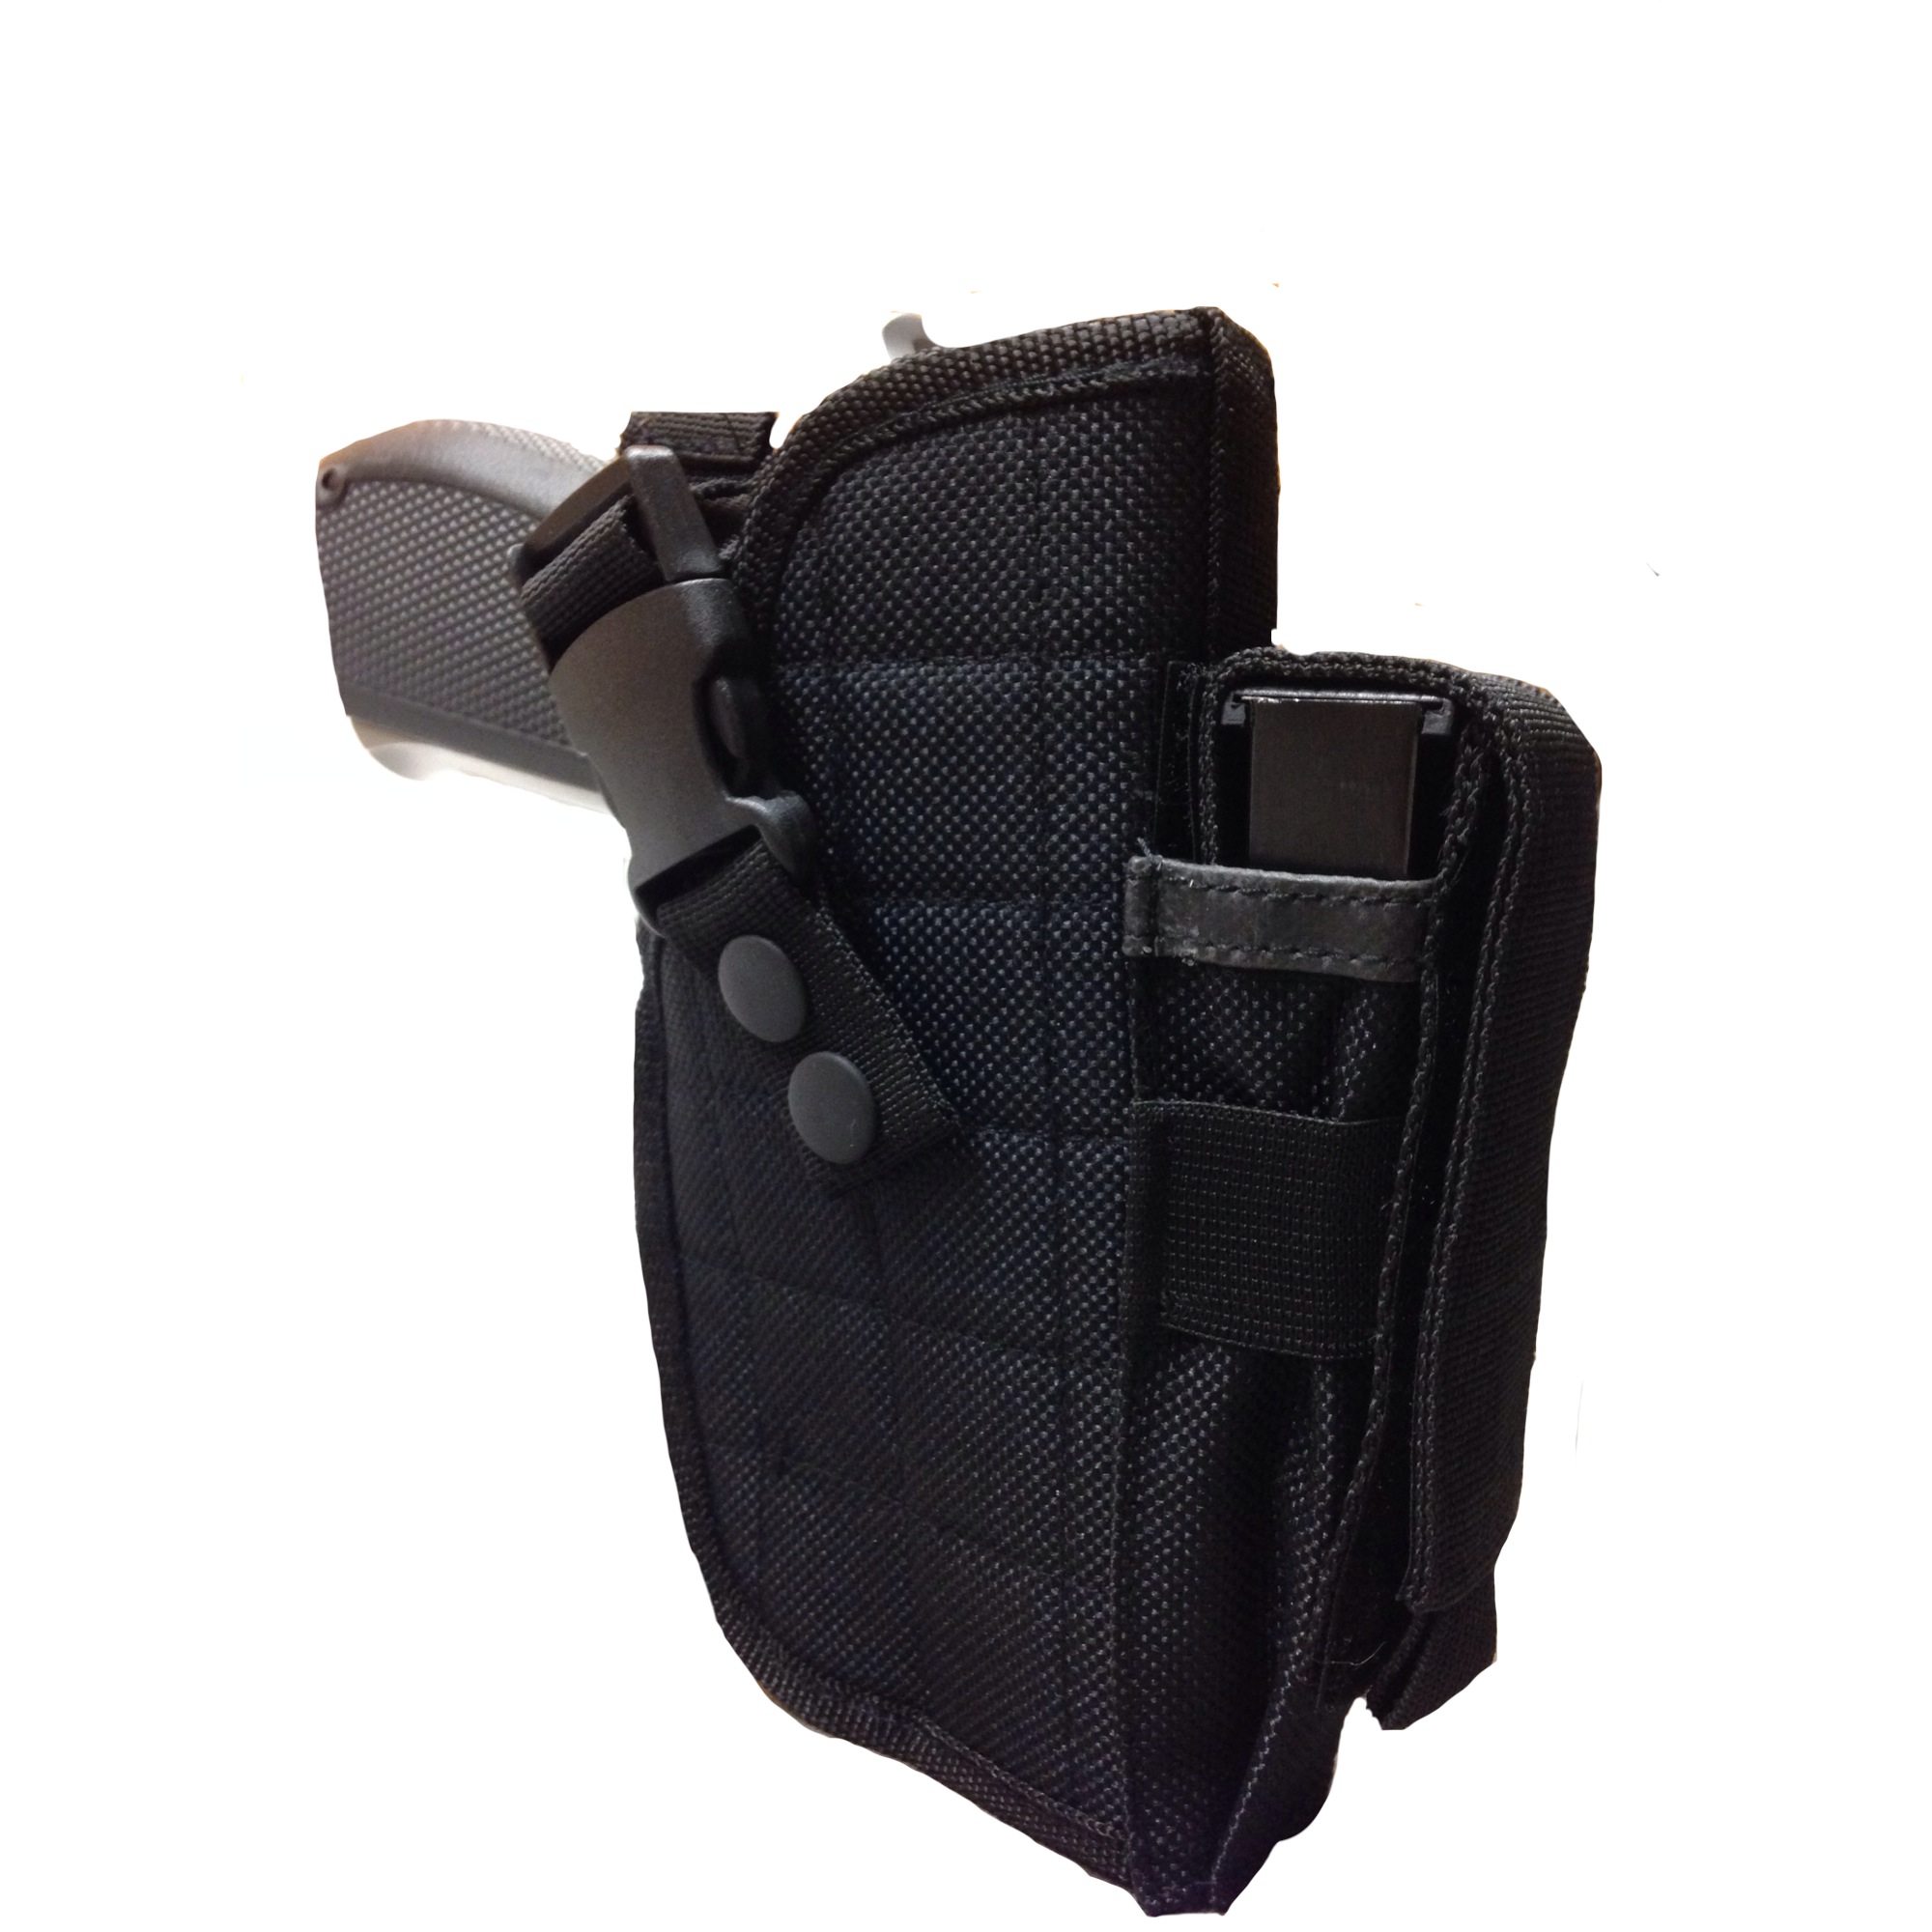 Details about   Tactical Holster Gun Holster Punch Magazine Pouch Hand cuffs Pistol Carry Bag 